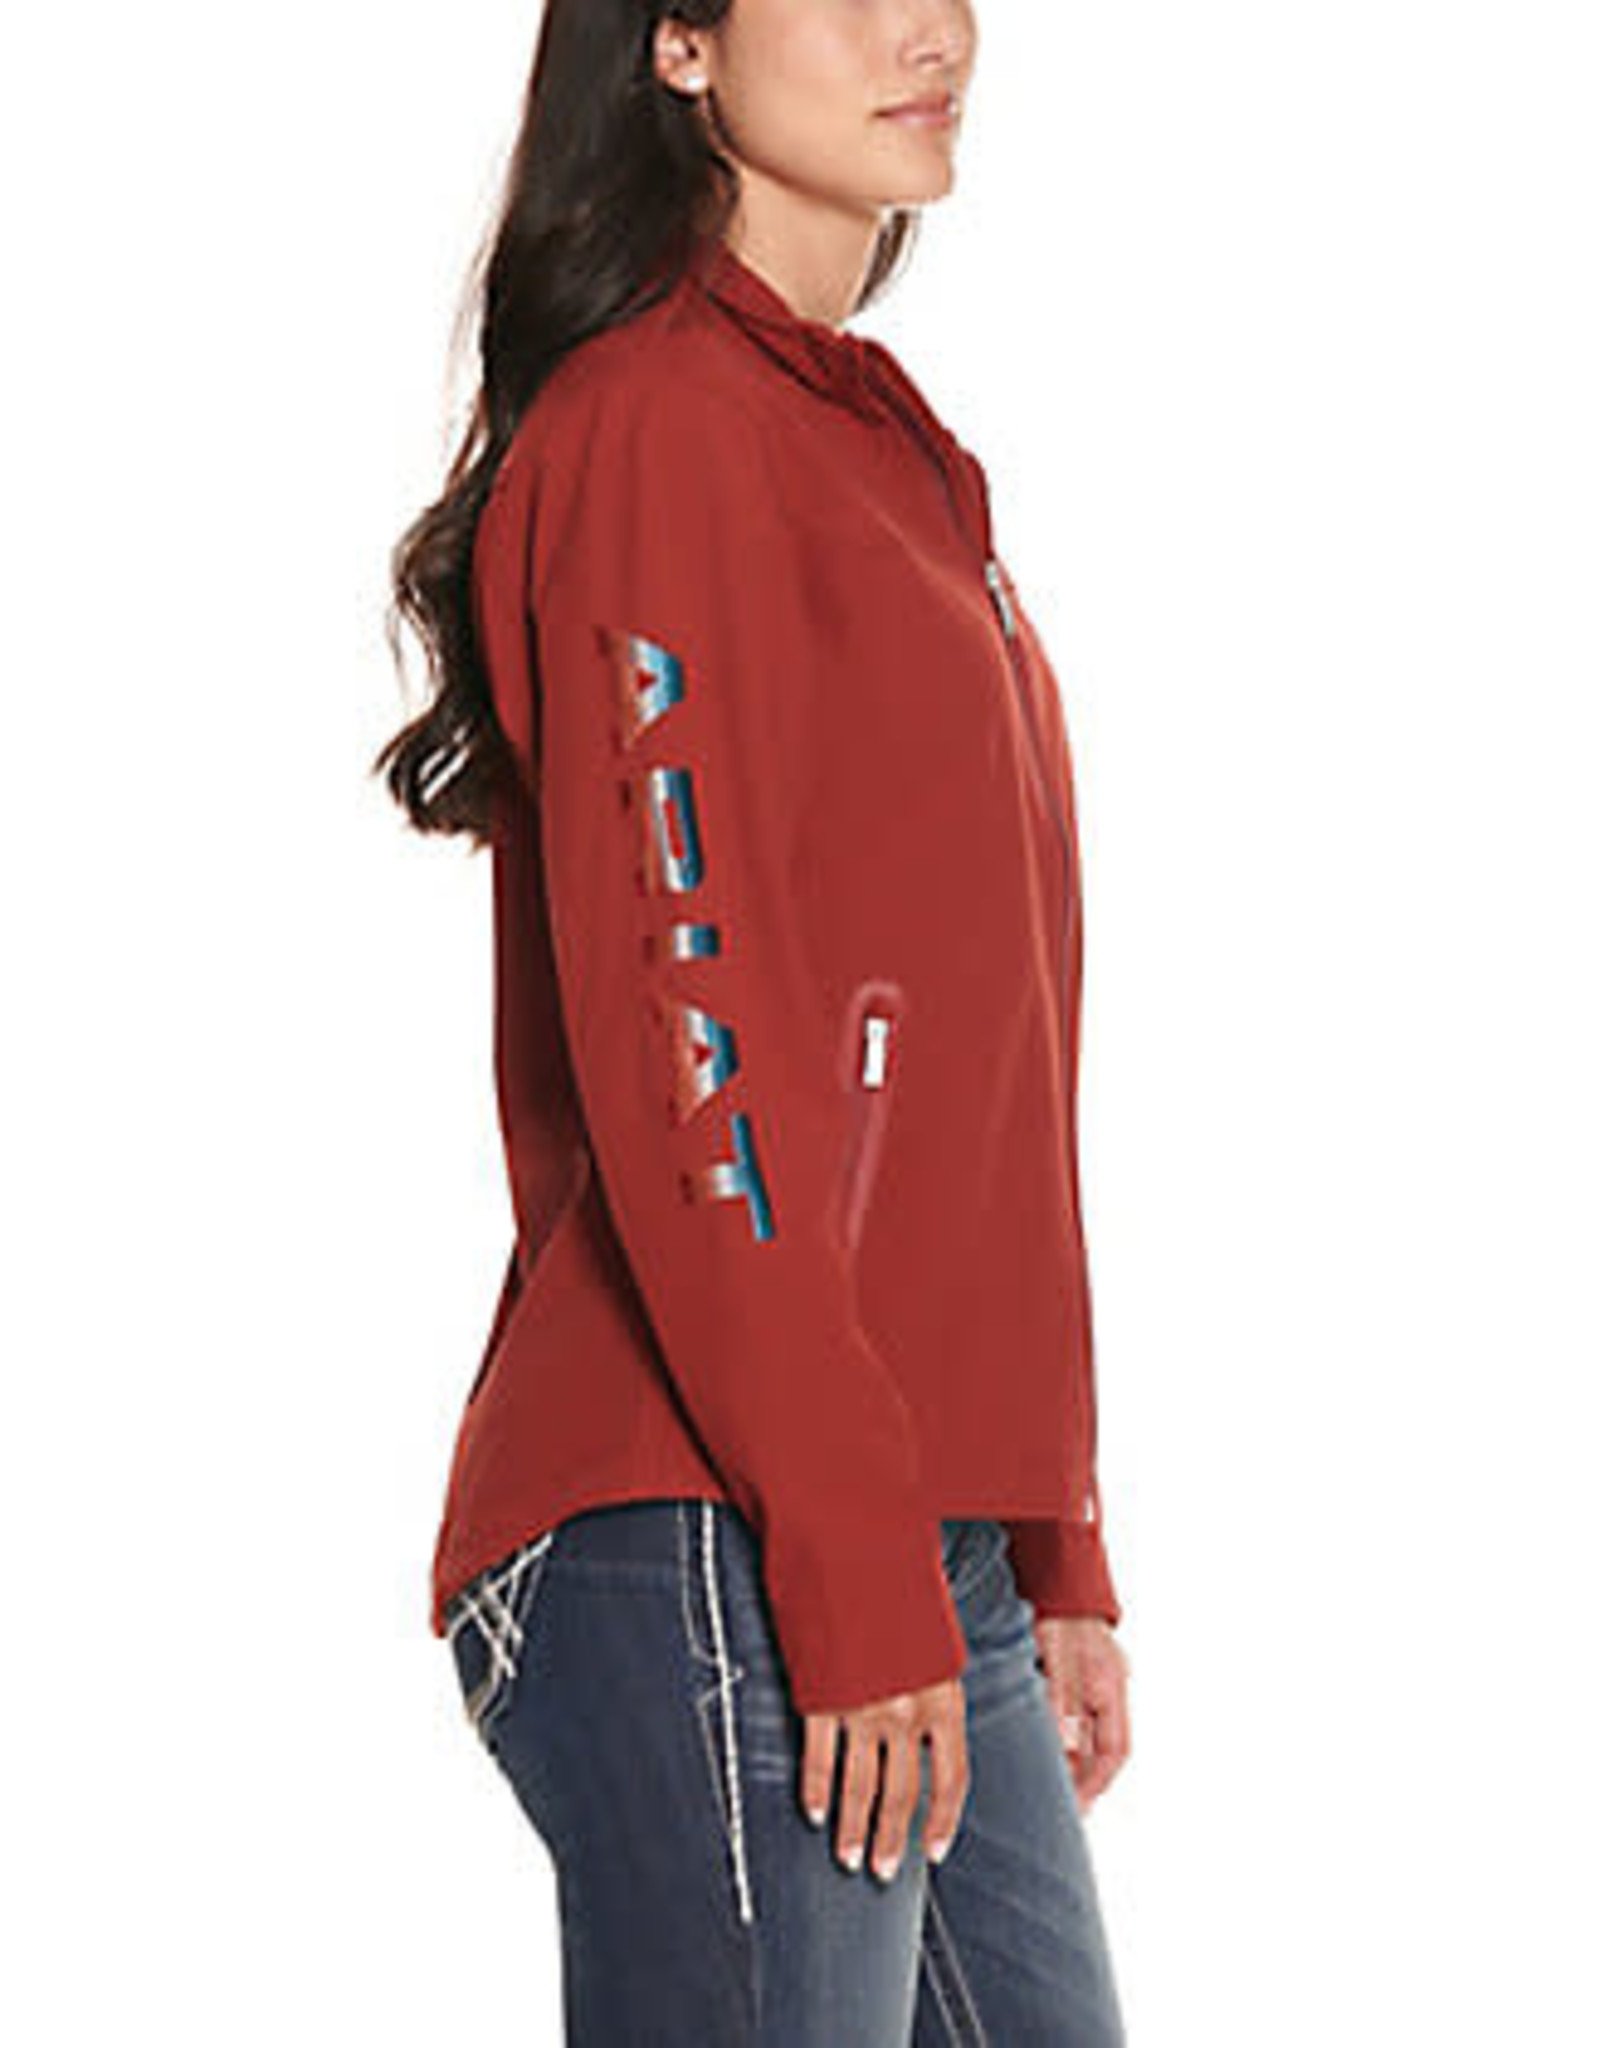 Ariat Ariat Ladies Rouge Red/Celestial Serape 10041280 Team Softshell Jacket